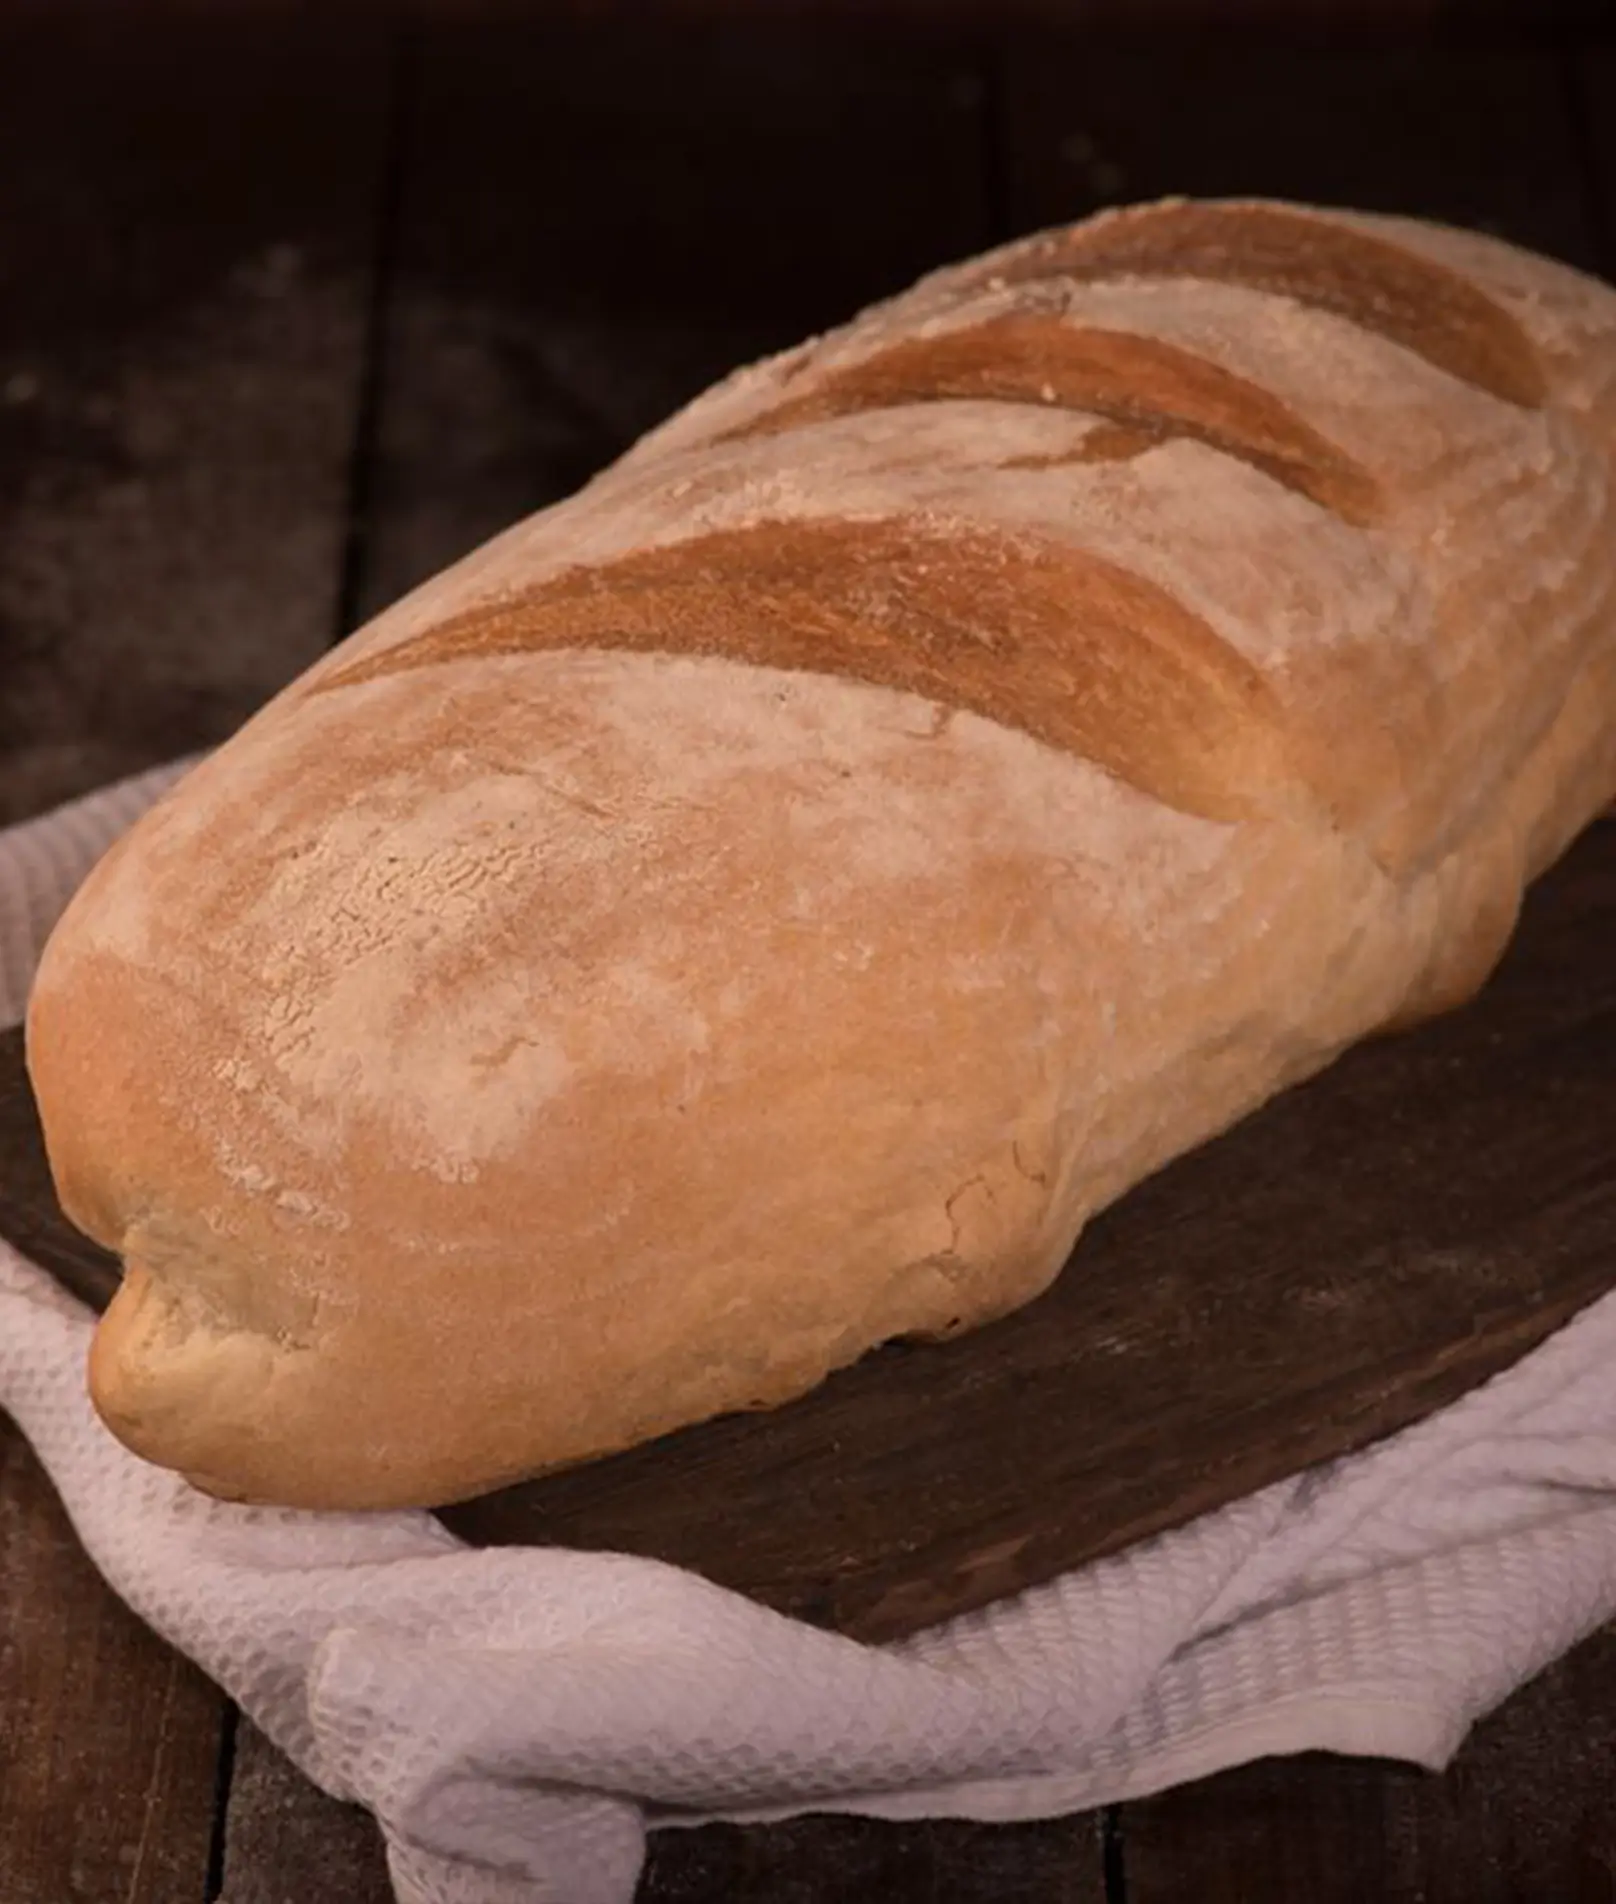 Mali domaći kruh